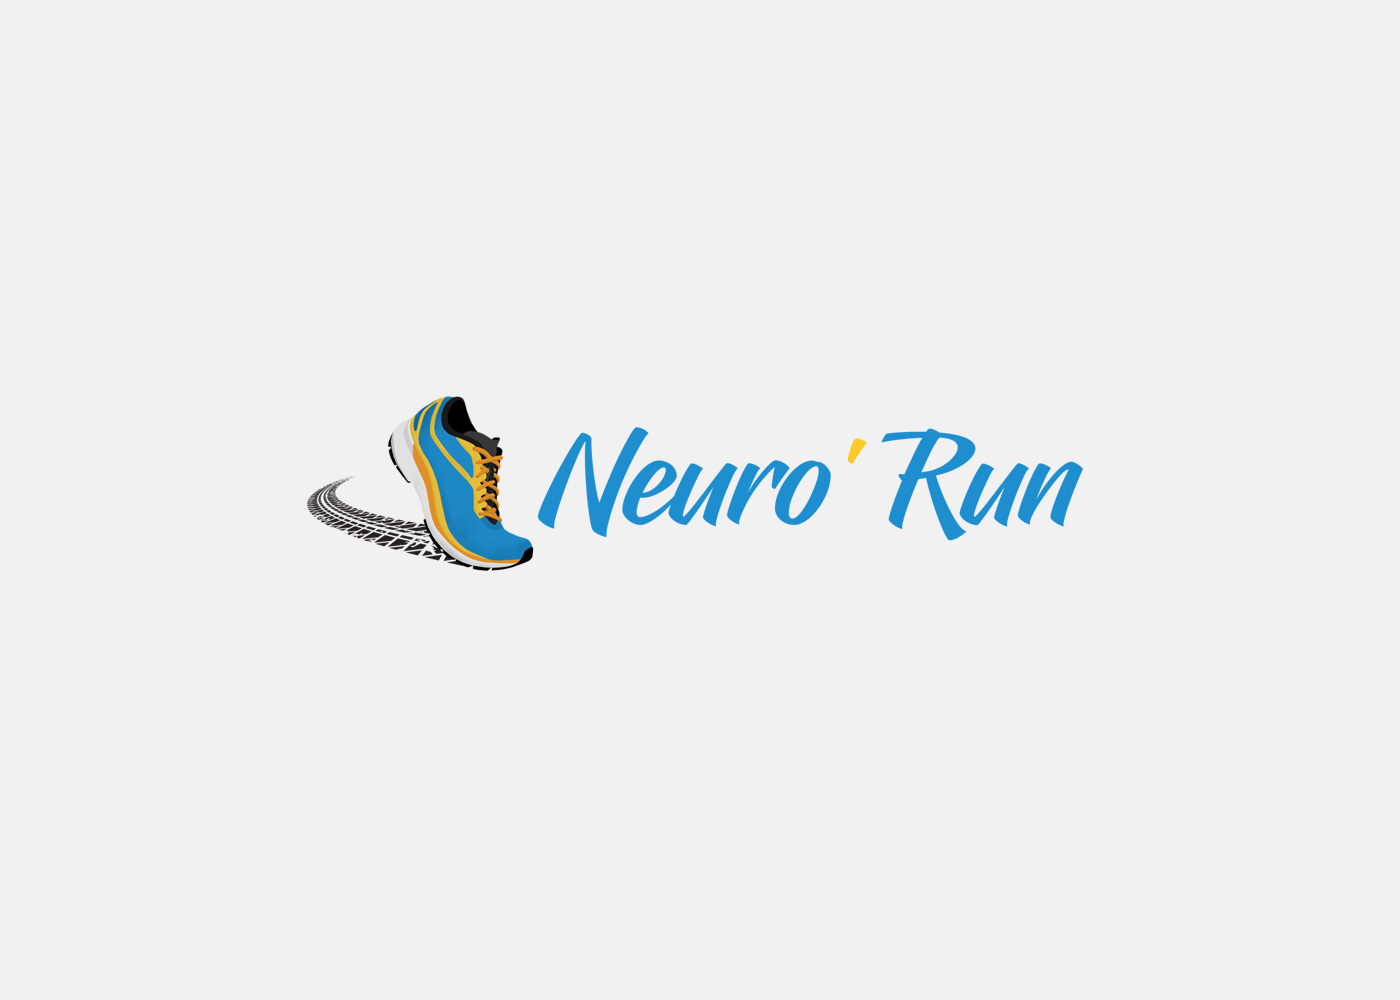 Neuro’run